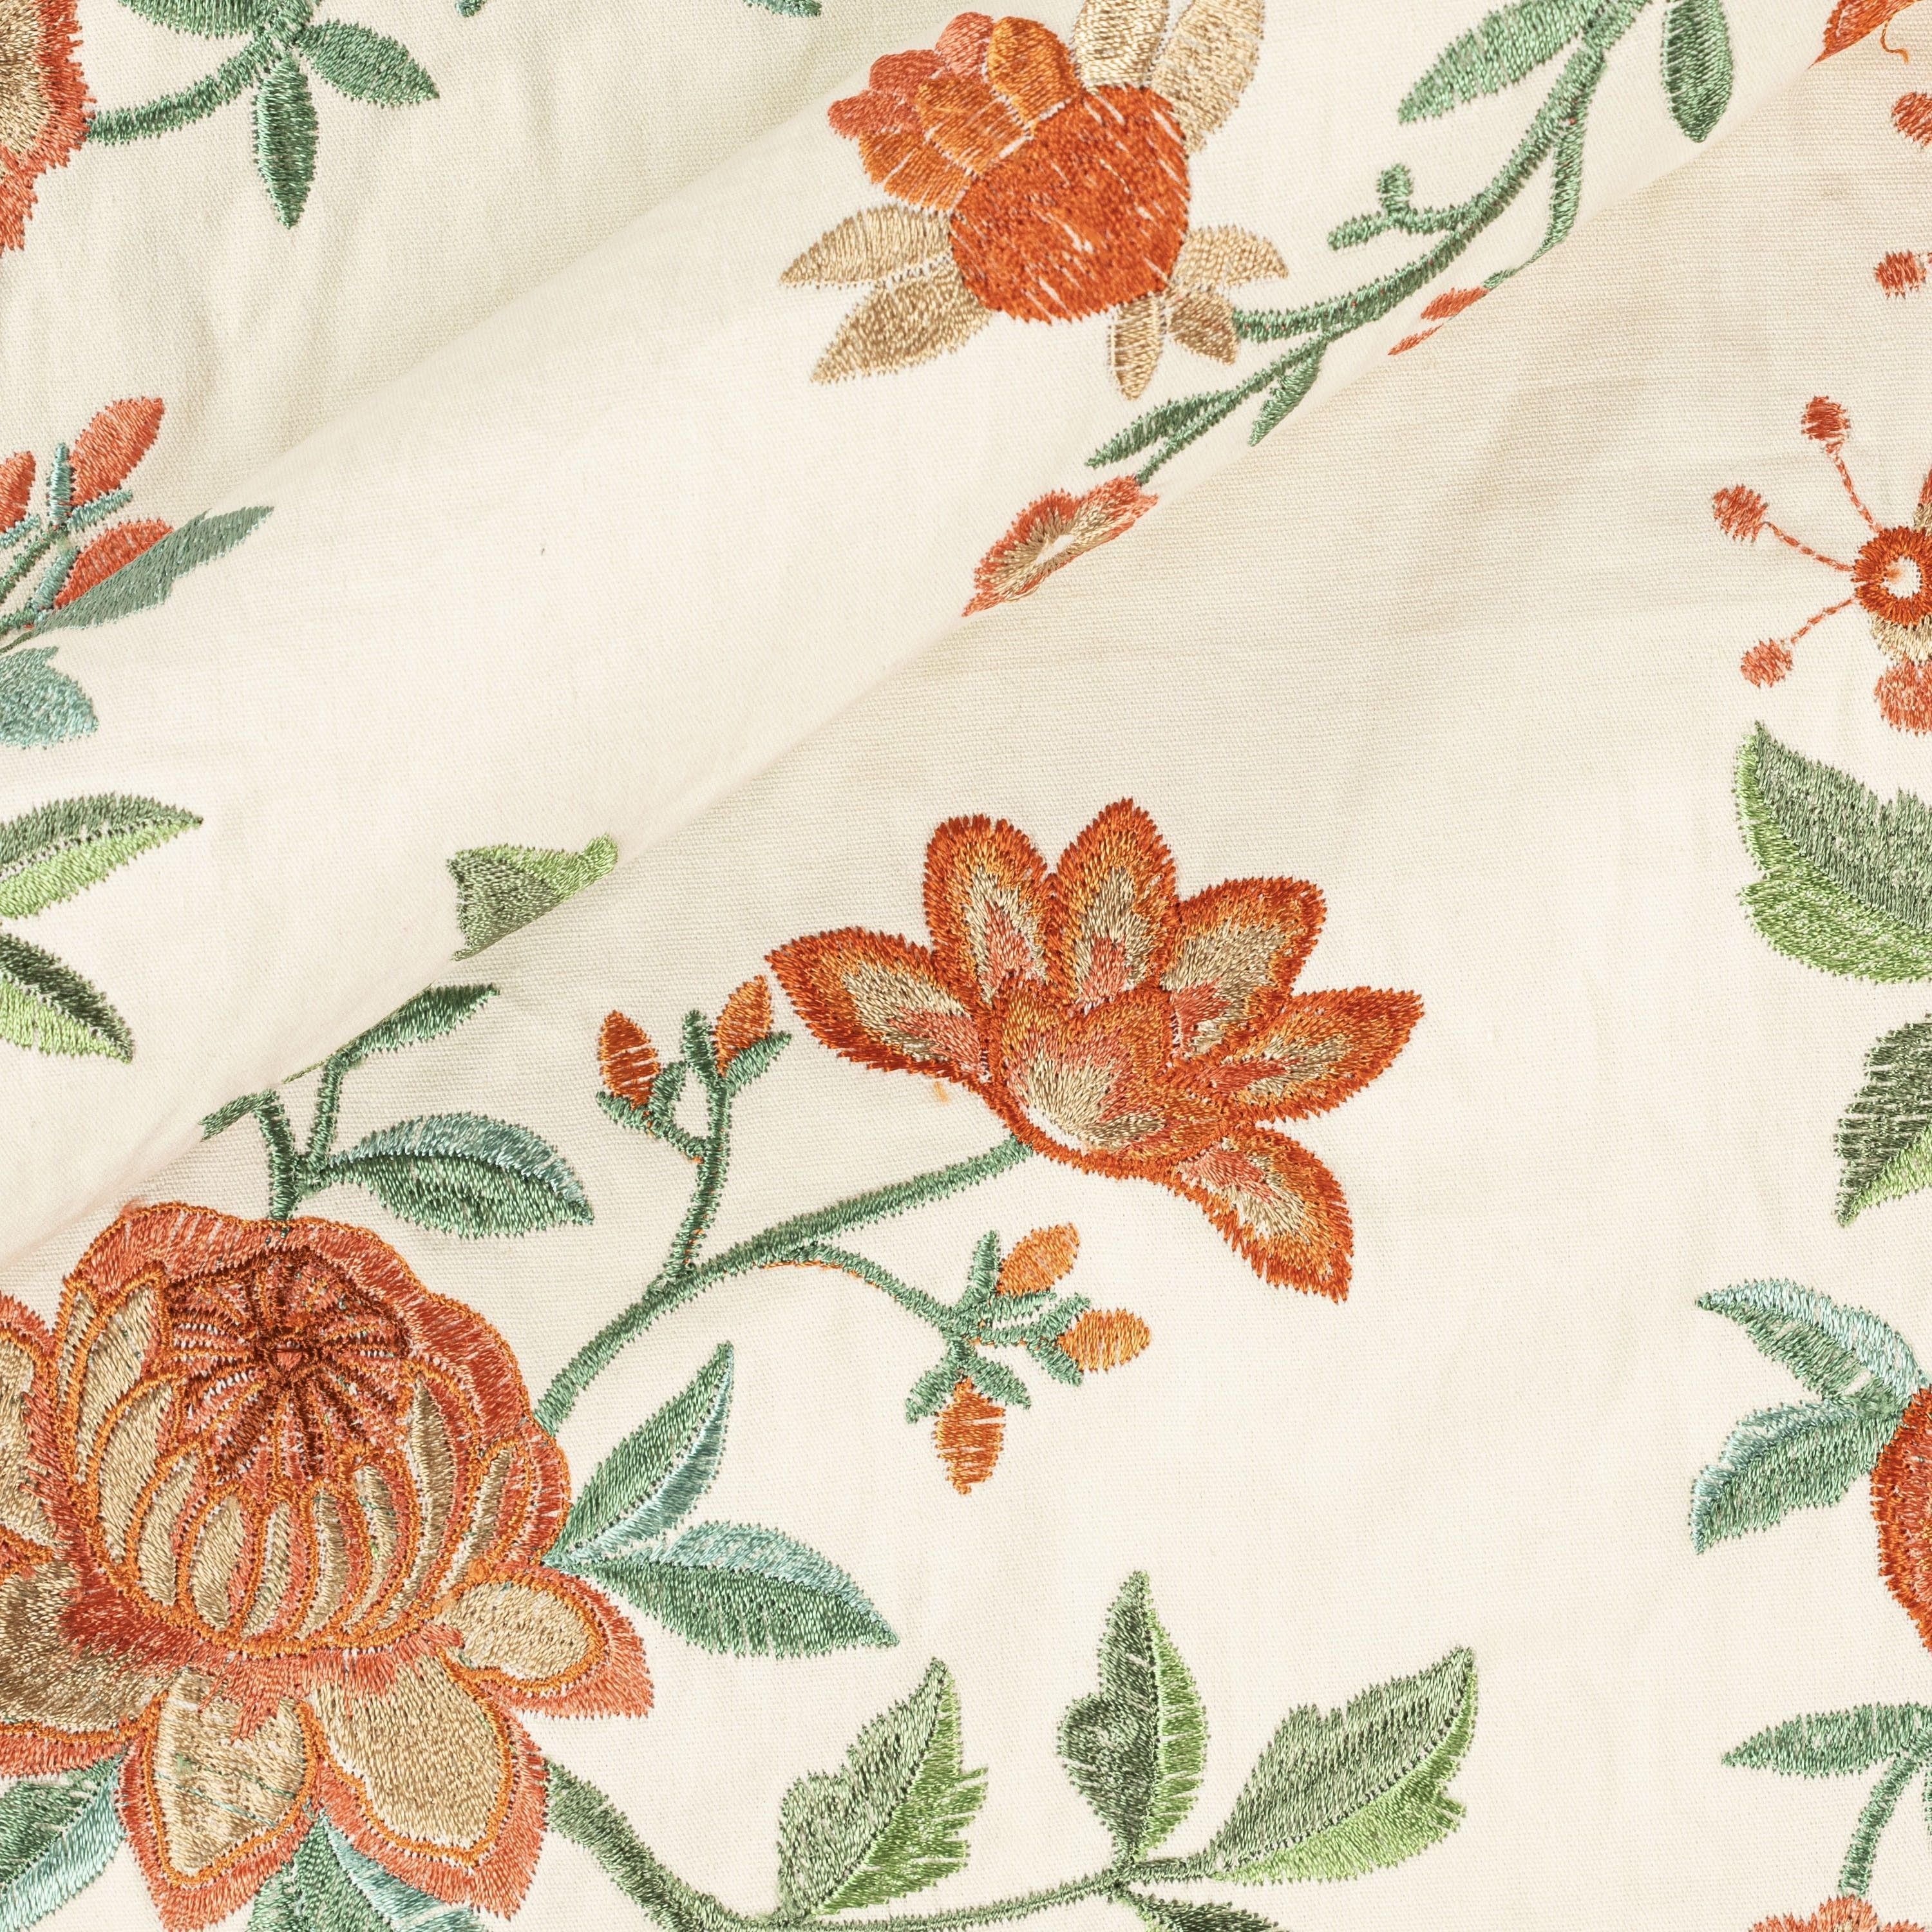 https://www.carnet.it/28948/floral-embroidery-on-cotton.jpg